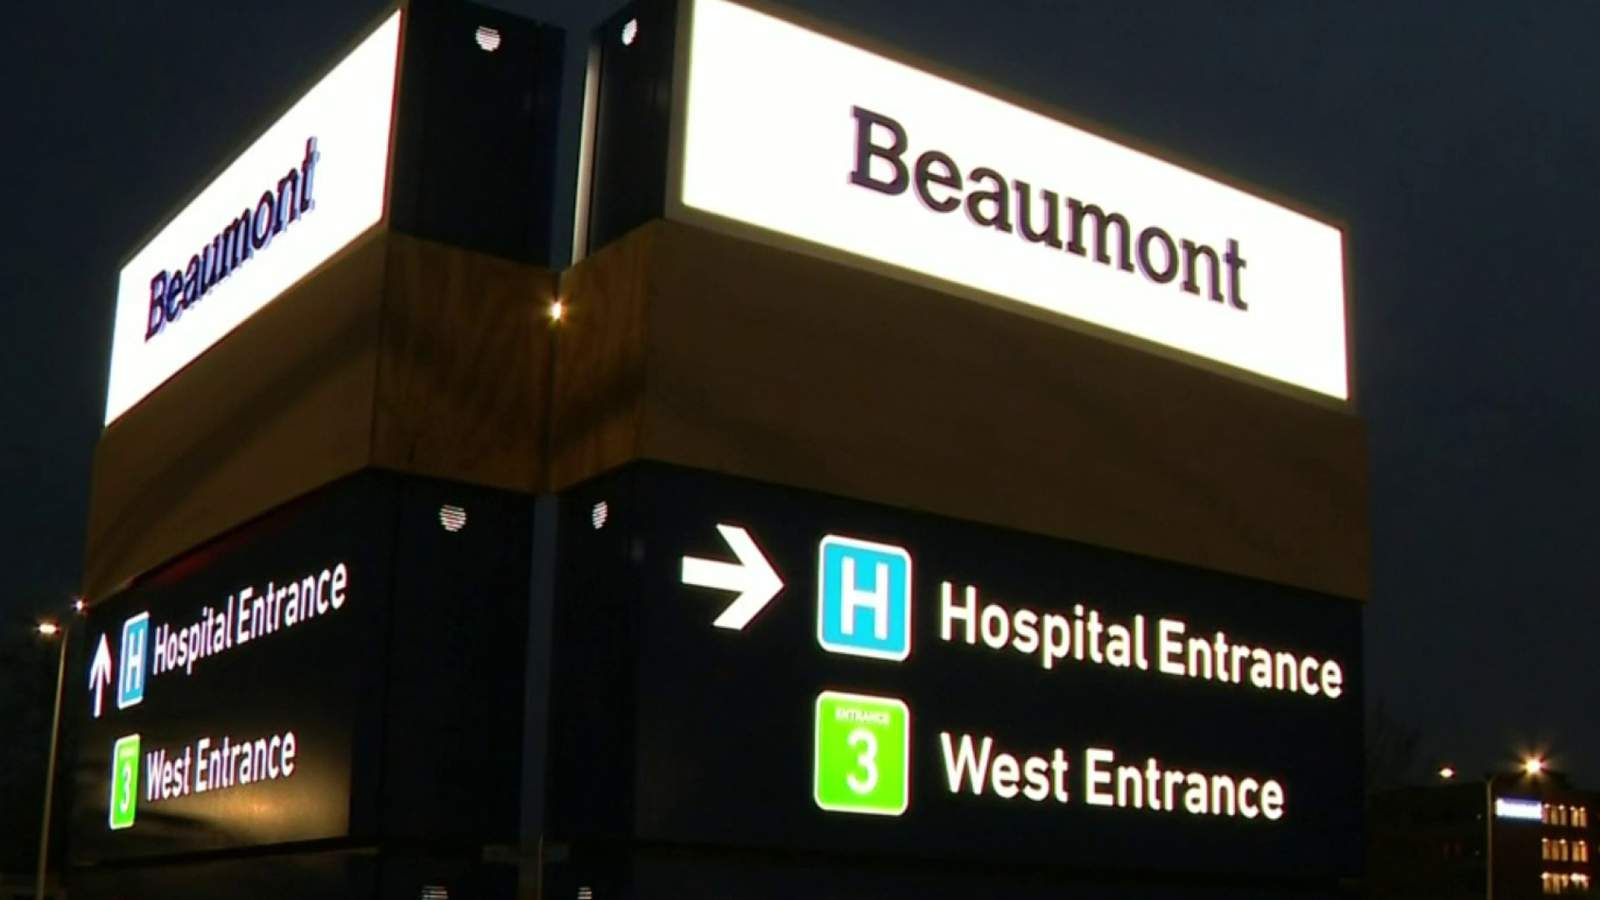 Beaumont Hospital-Wayne restricts visitation as coronavirus spreads rapidly in Michigan